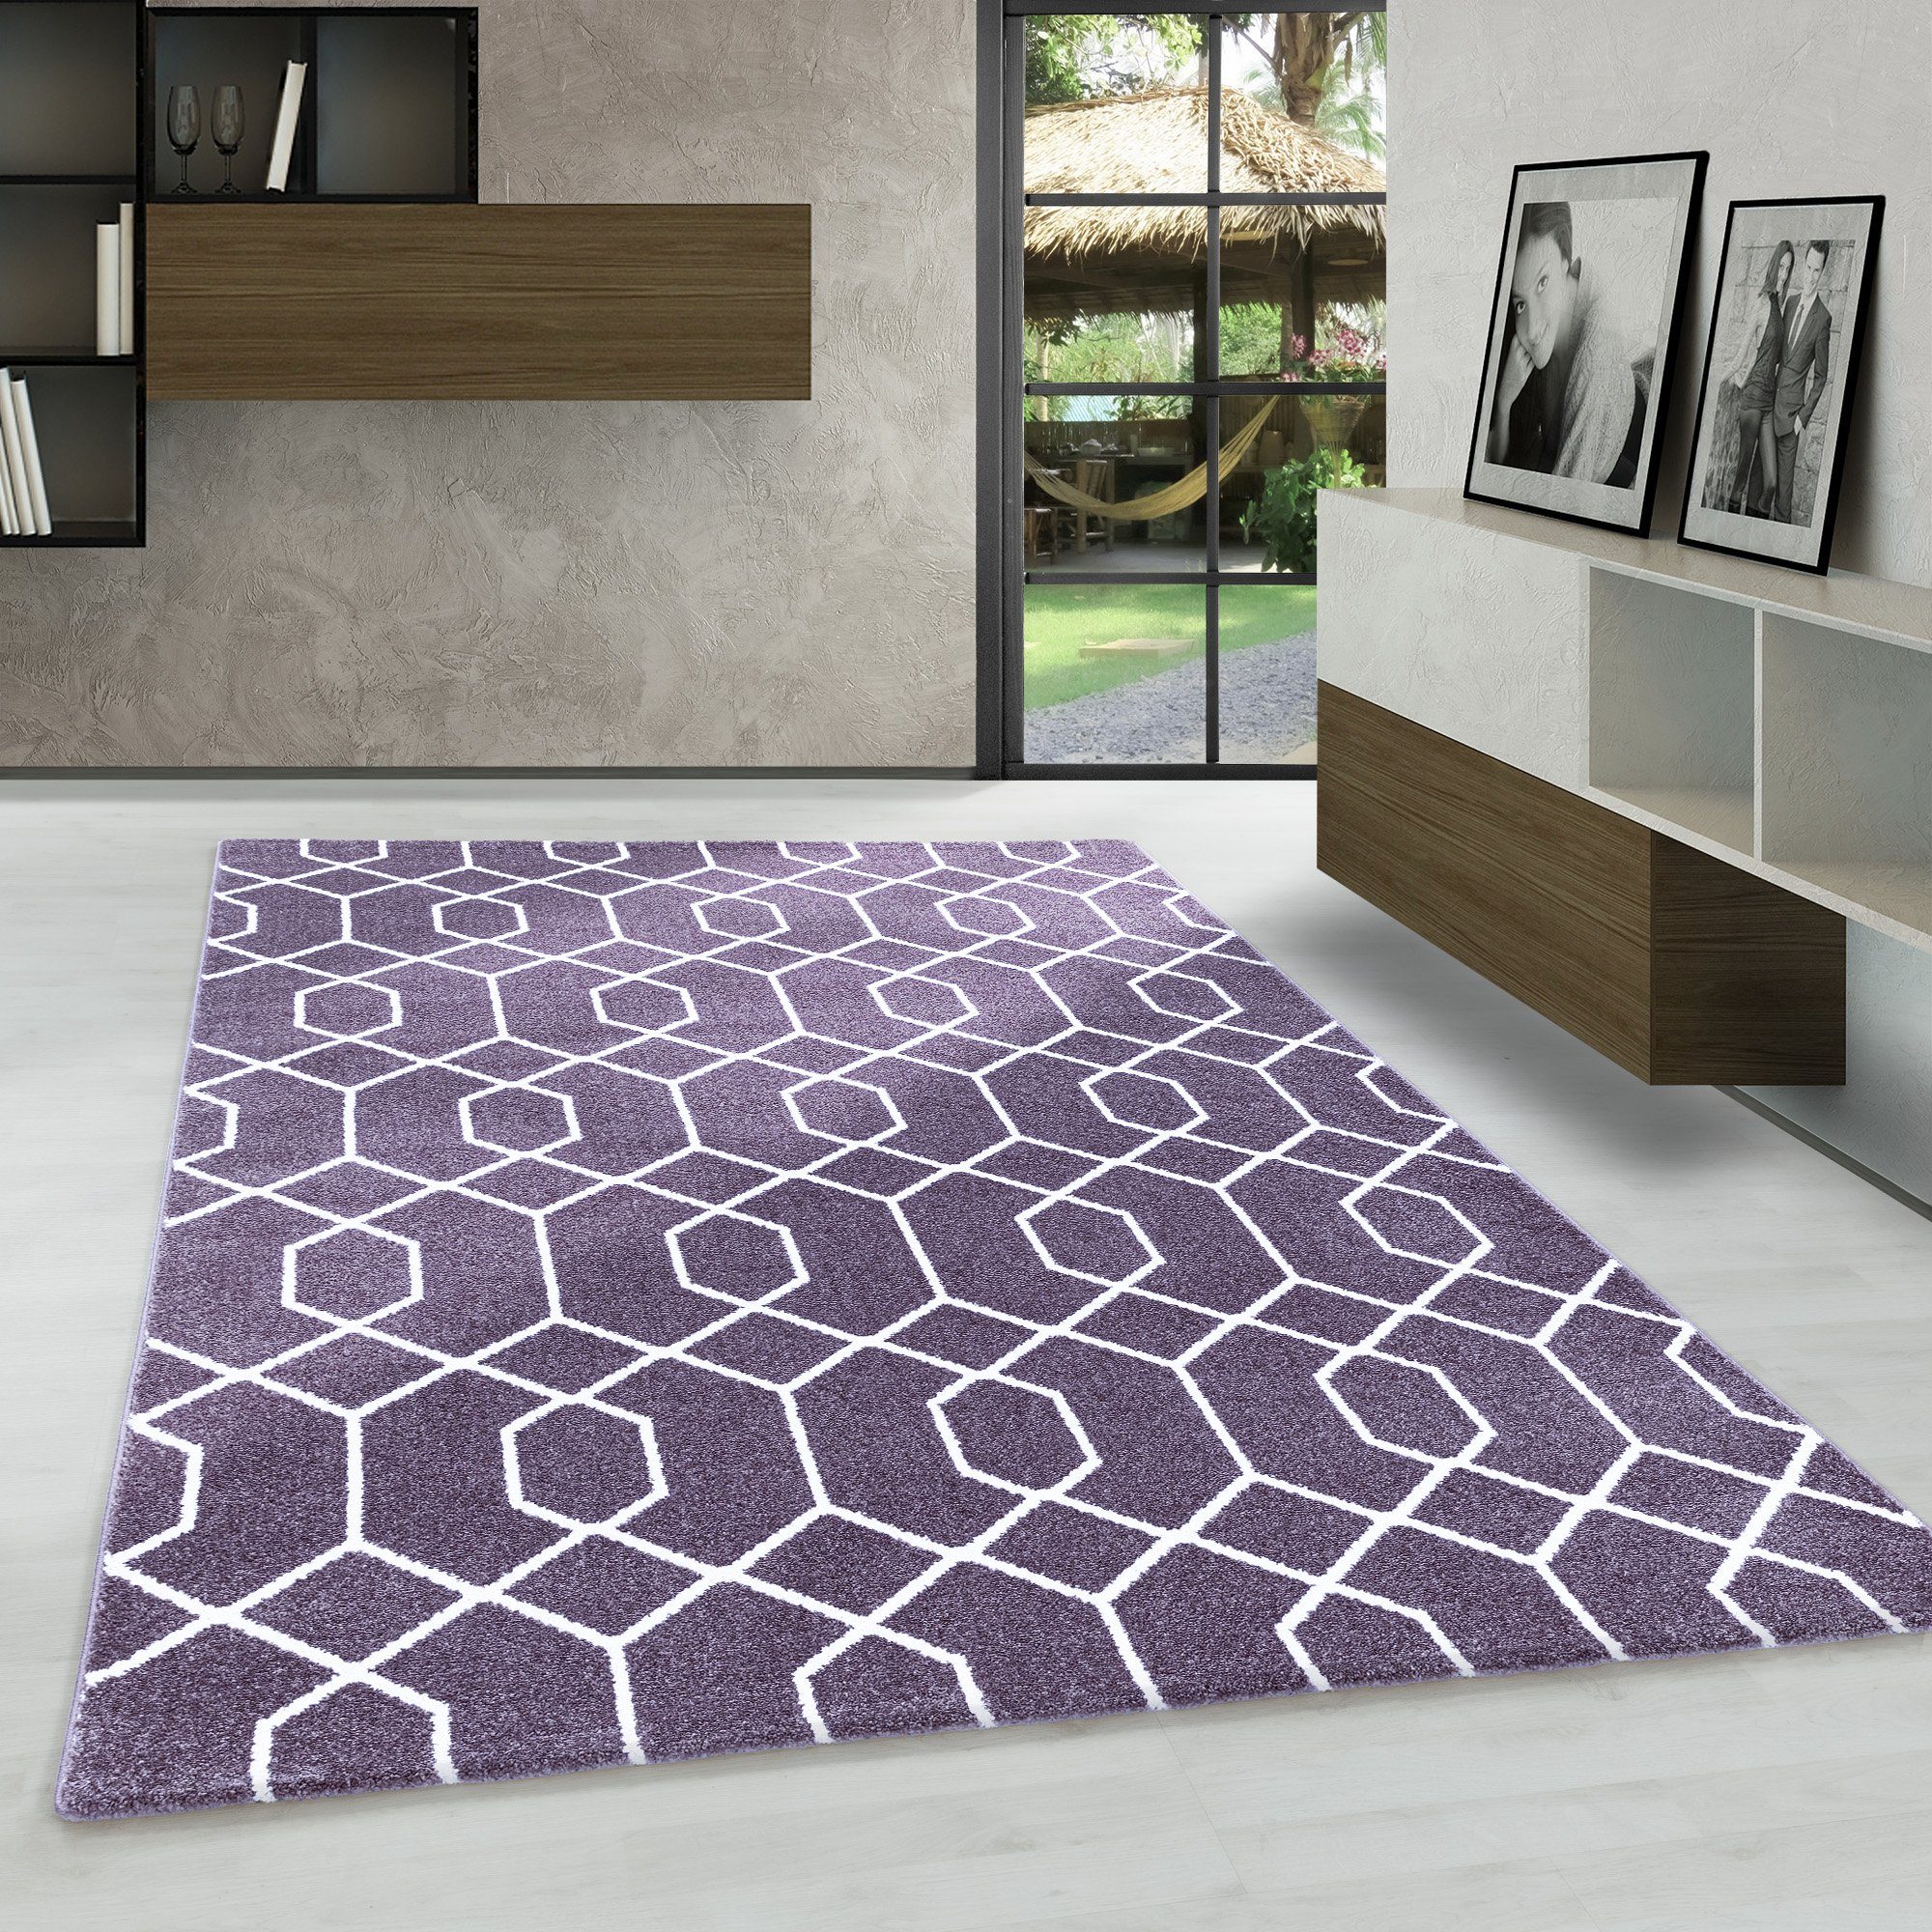 Frisé-Teppich Geometrisch Design, Carpetsale24, Läufer, Geometrisch Höhe: 10 mm, Design Violett Teppich Kurzflor Teppich Wohnzimmer